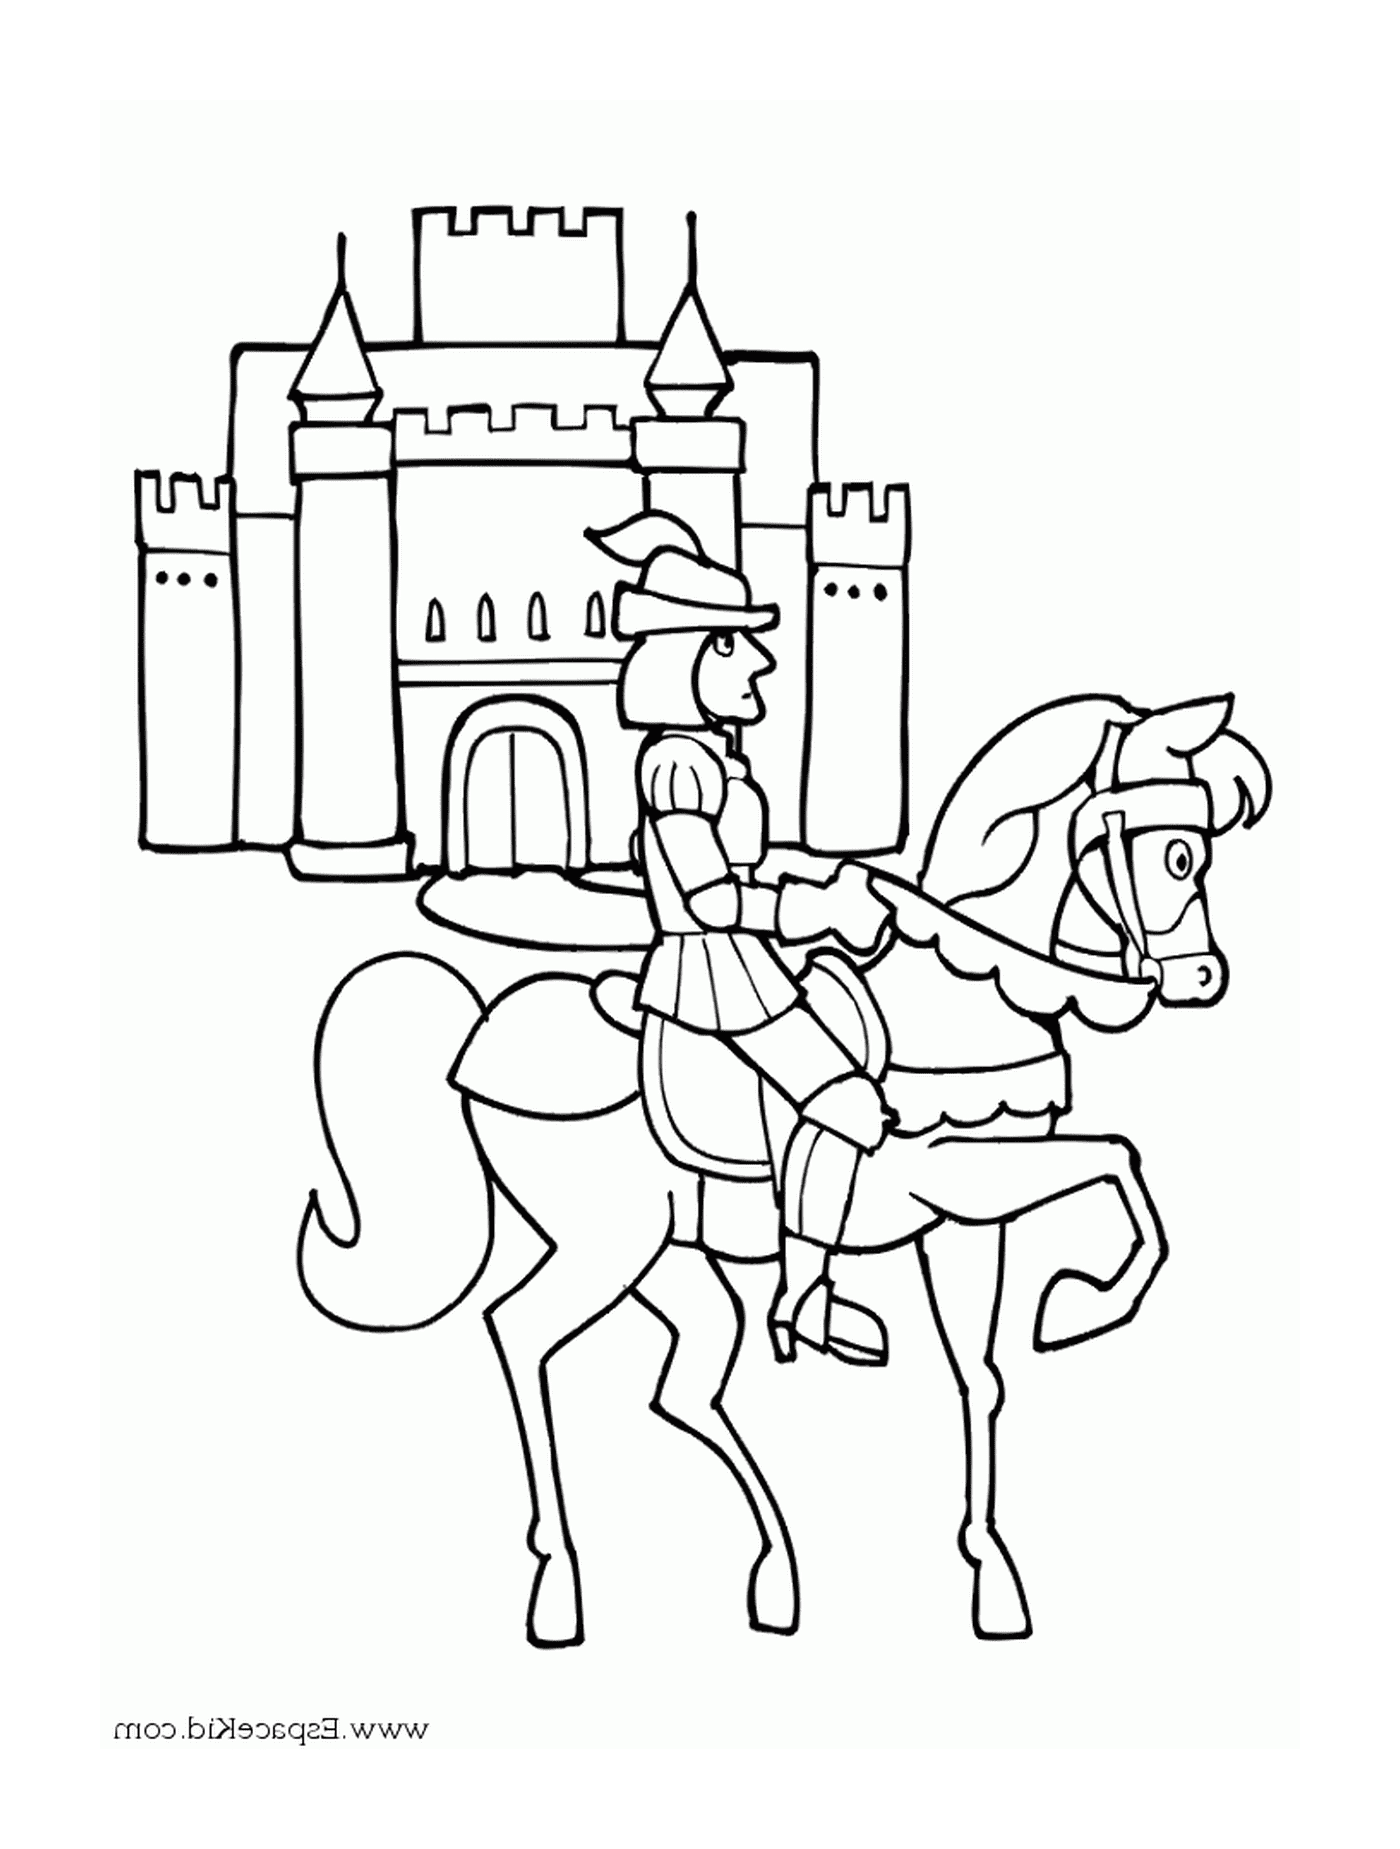  Un uomo a cavallo davanti a un castello 